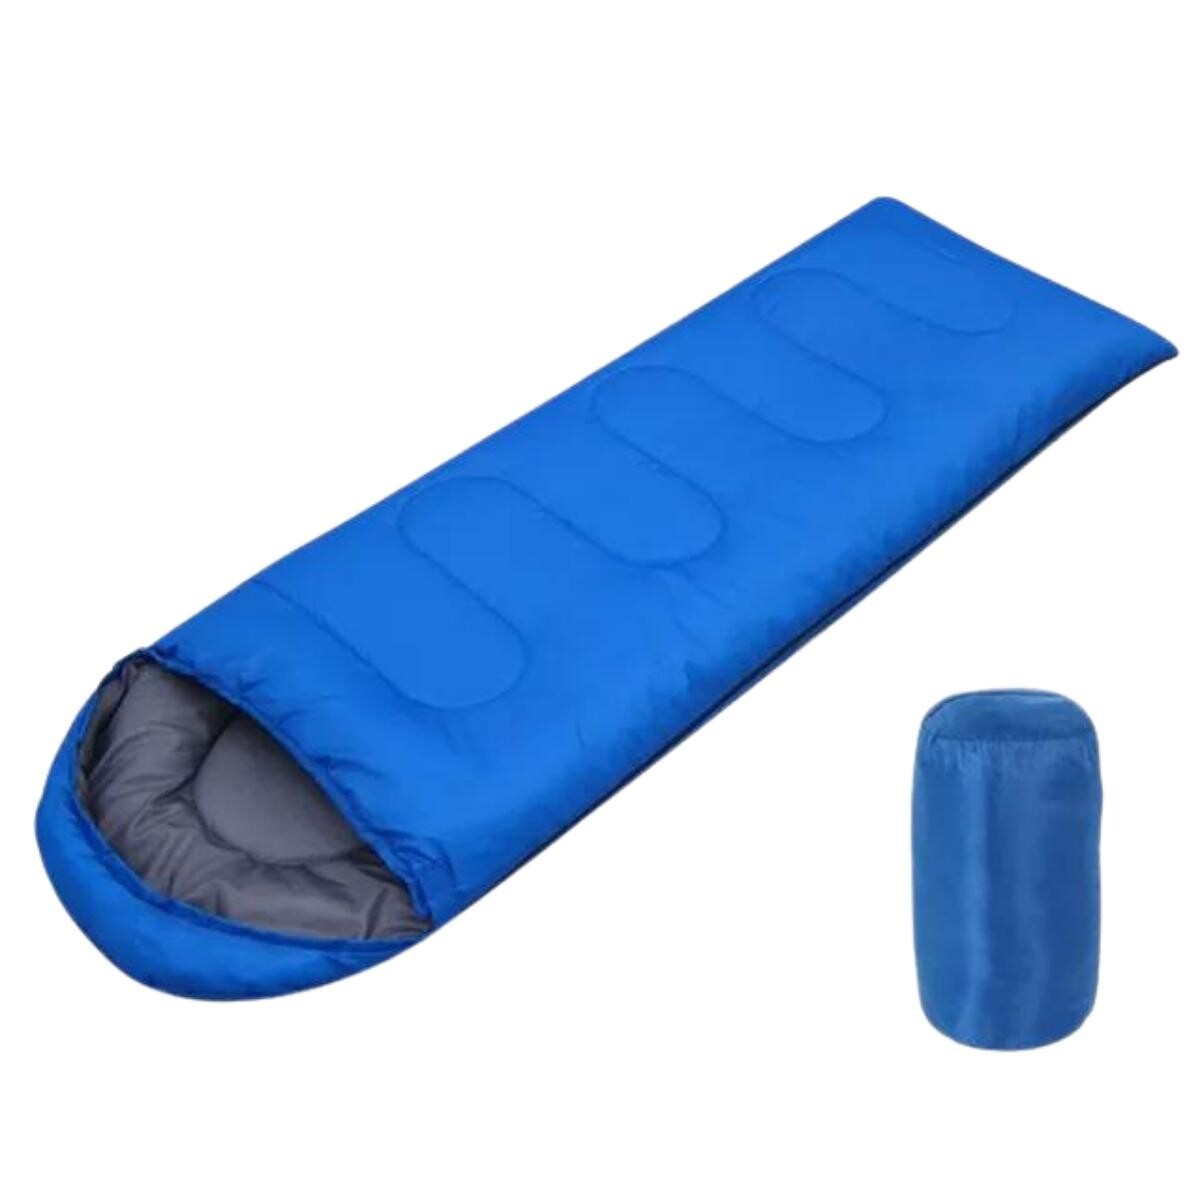 Sobre de dormir con capucha - 0.8 Kg - Azul 